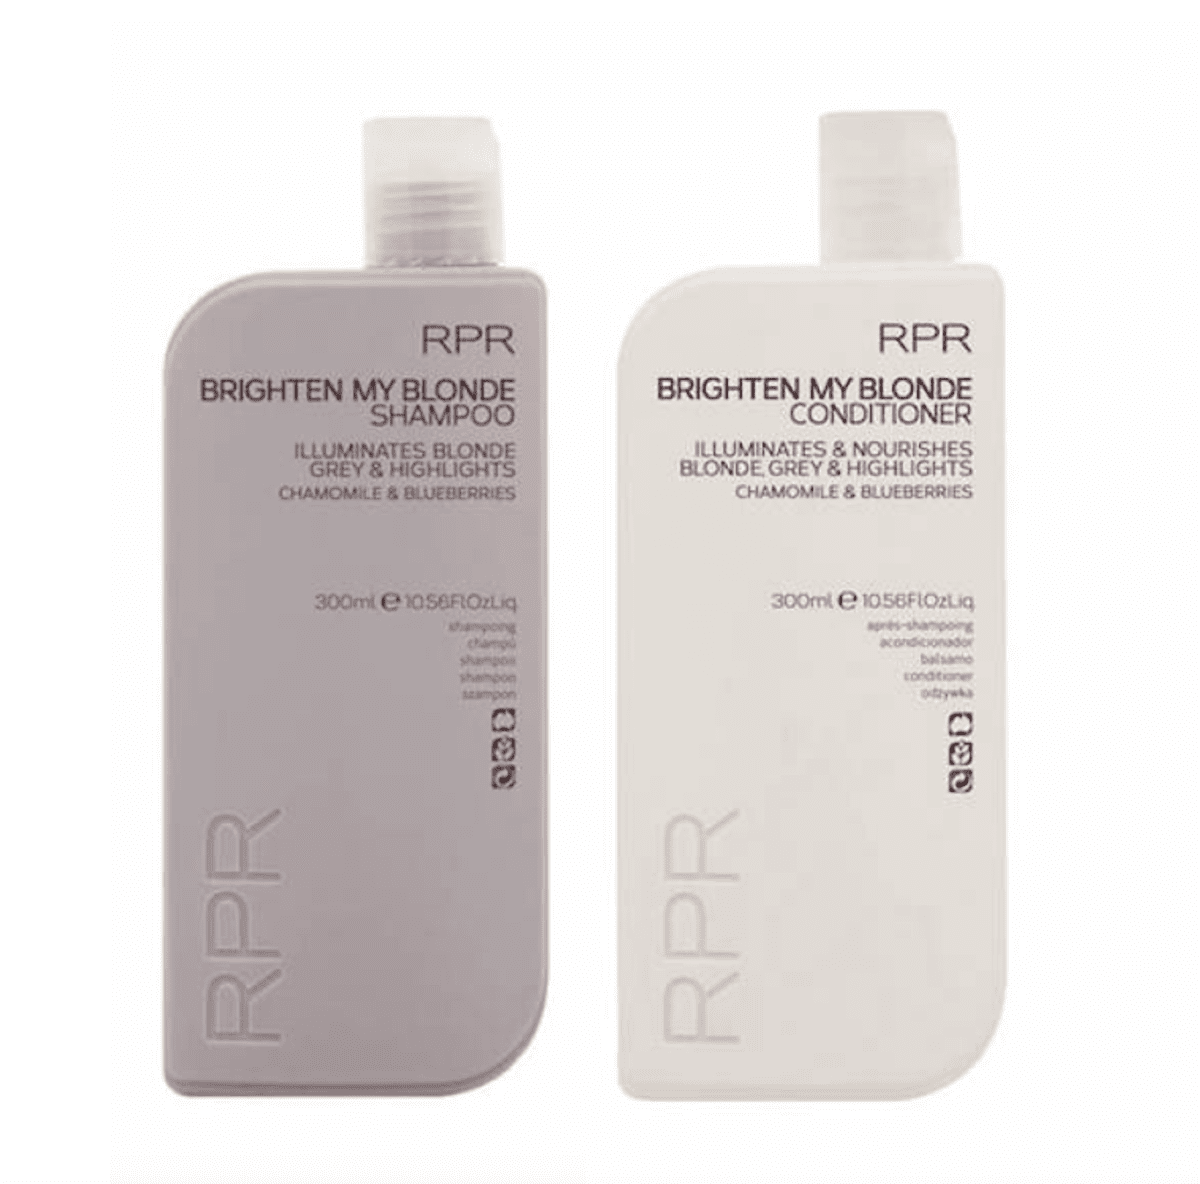 RPR Brighten My Blonde Shampoo and Conditioner 300ml Duo Bundle